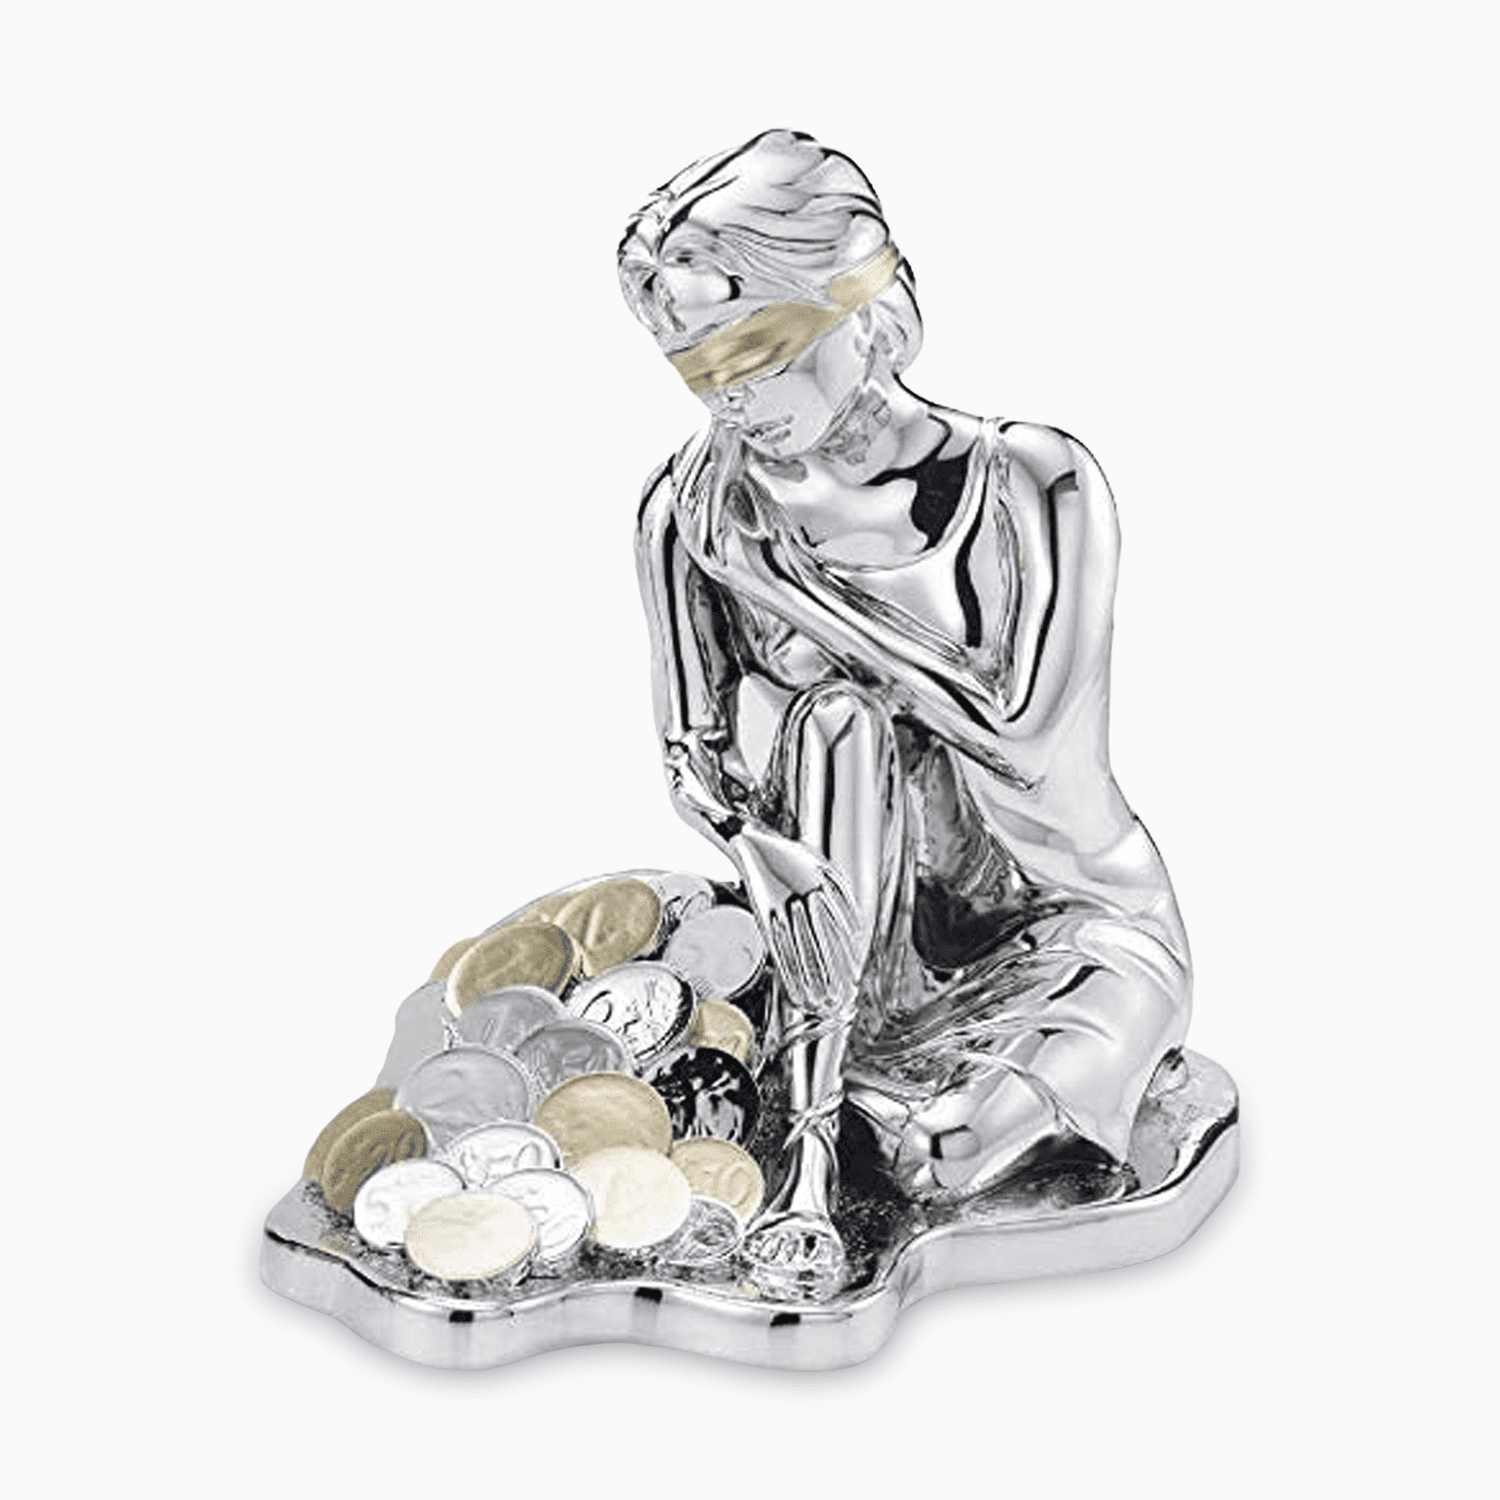 Statua della Dea Bendata Portafortuna in Resina Argentata Seduta su Soldi Oro e Argento Resina Argentata Albalu Bomboniere   